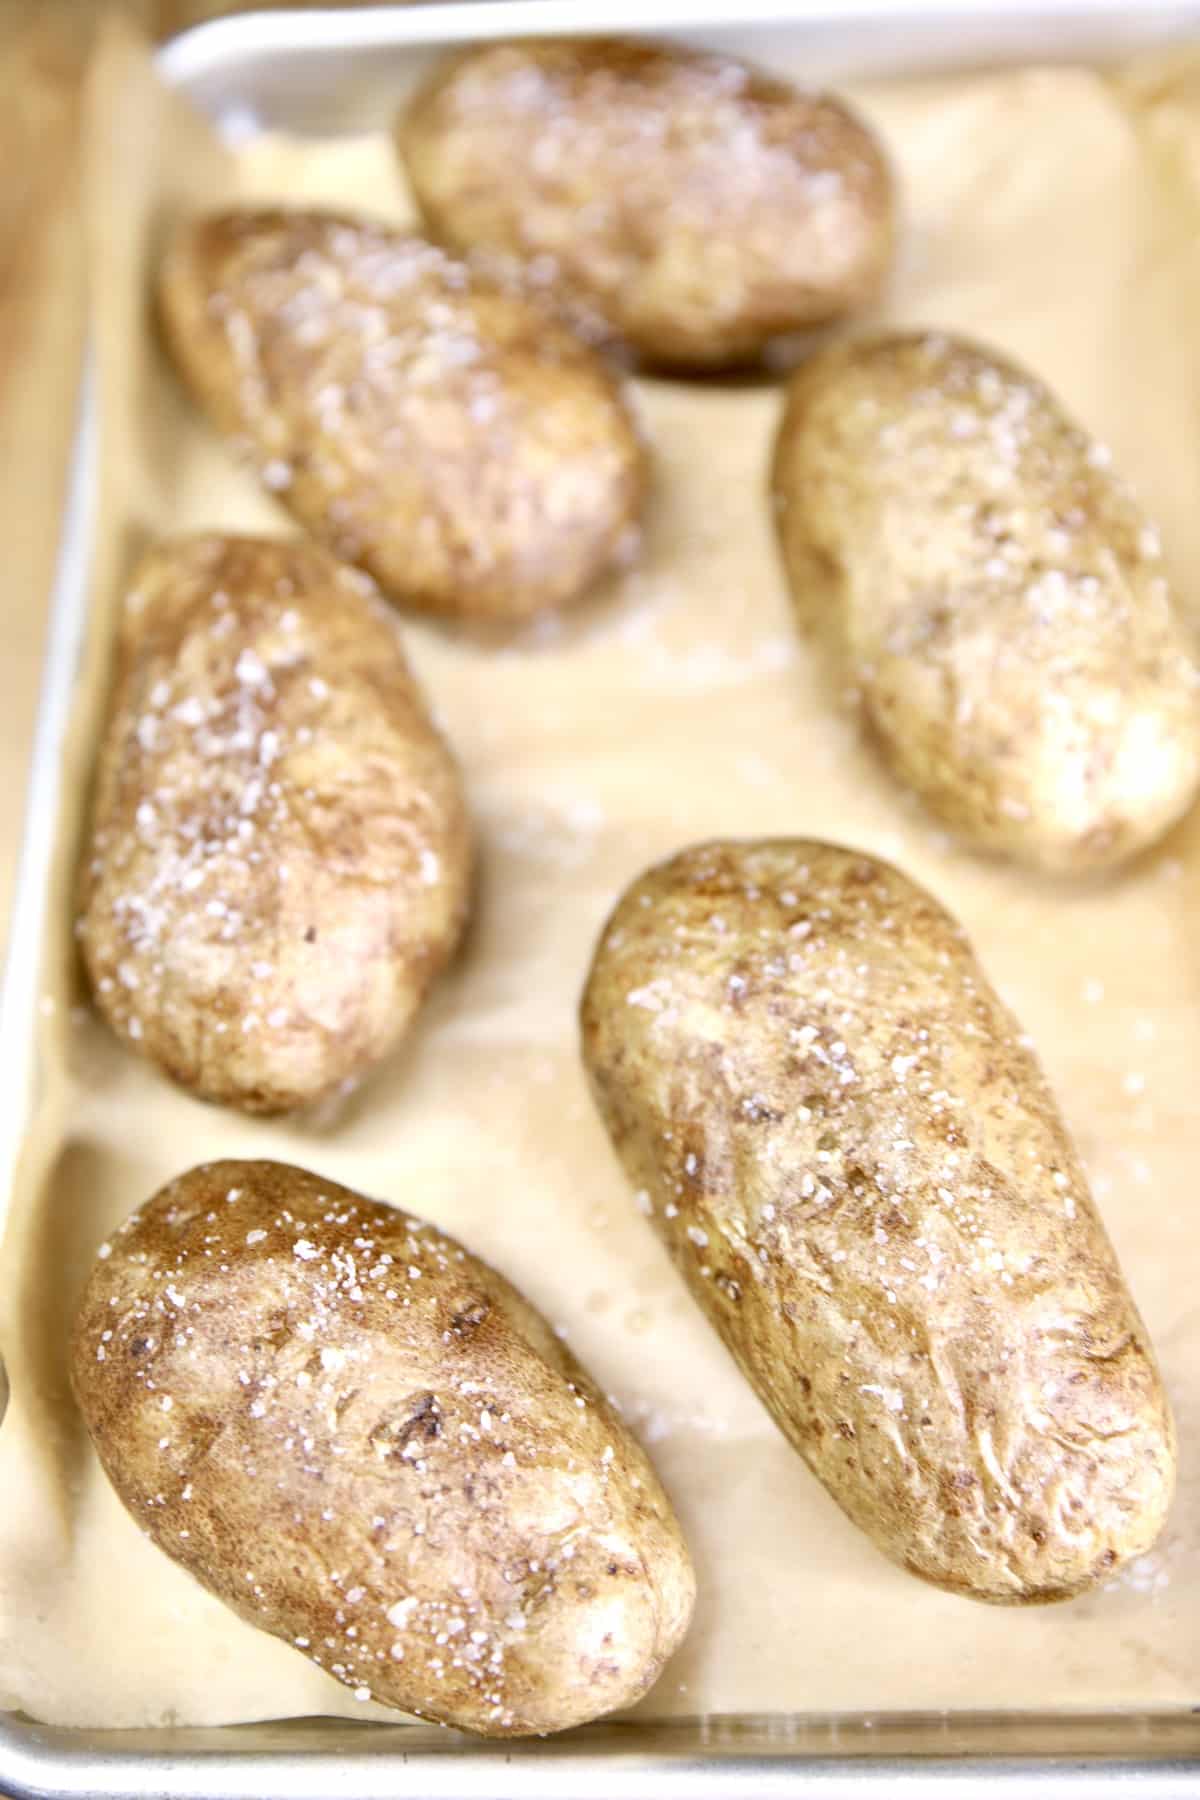 6 baked potatoes on a baking sheet.